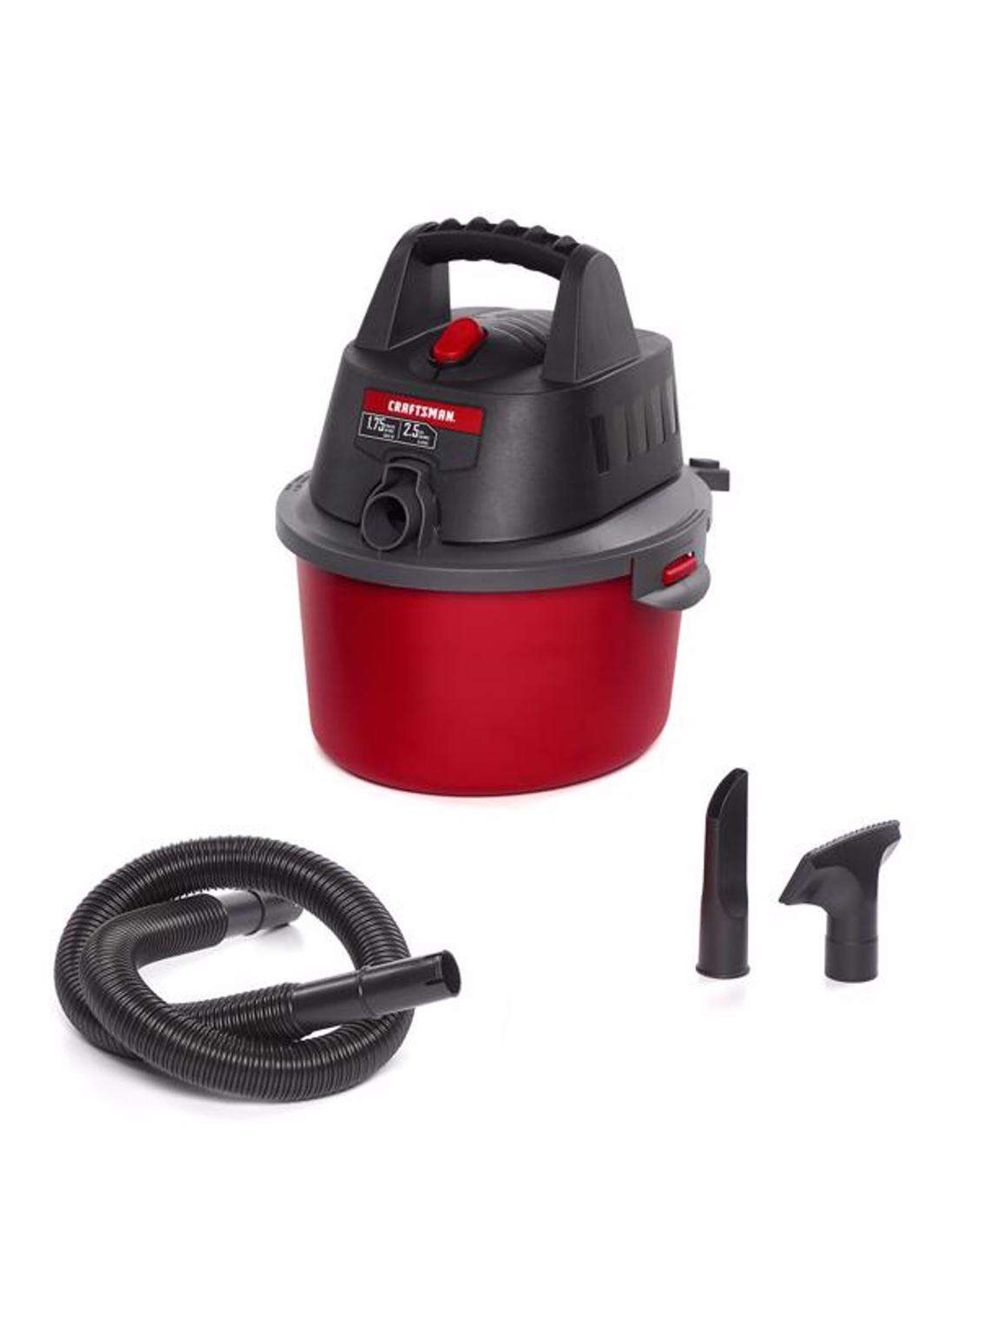 Shop-Vac 2.5-Gallons 2-HP Corded Shop Vacuum at